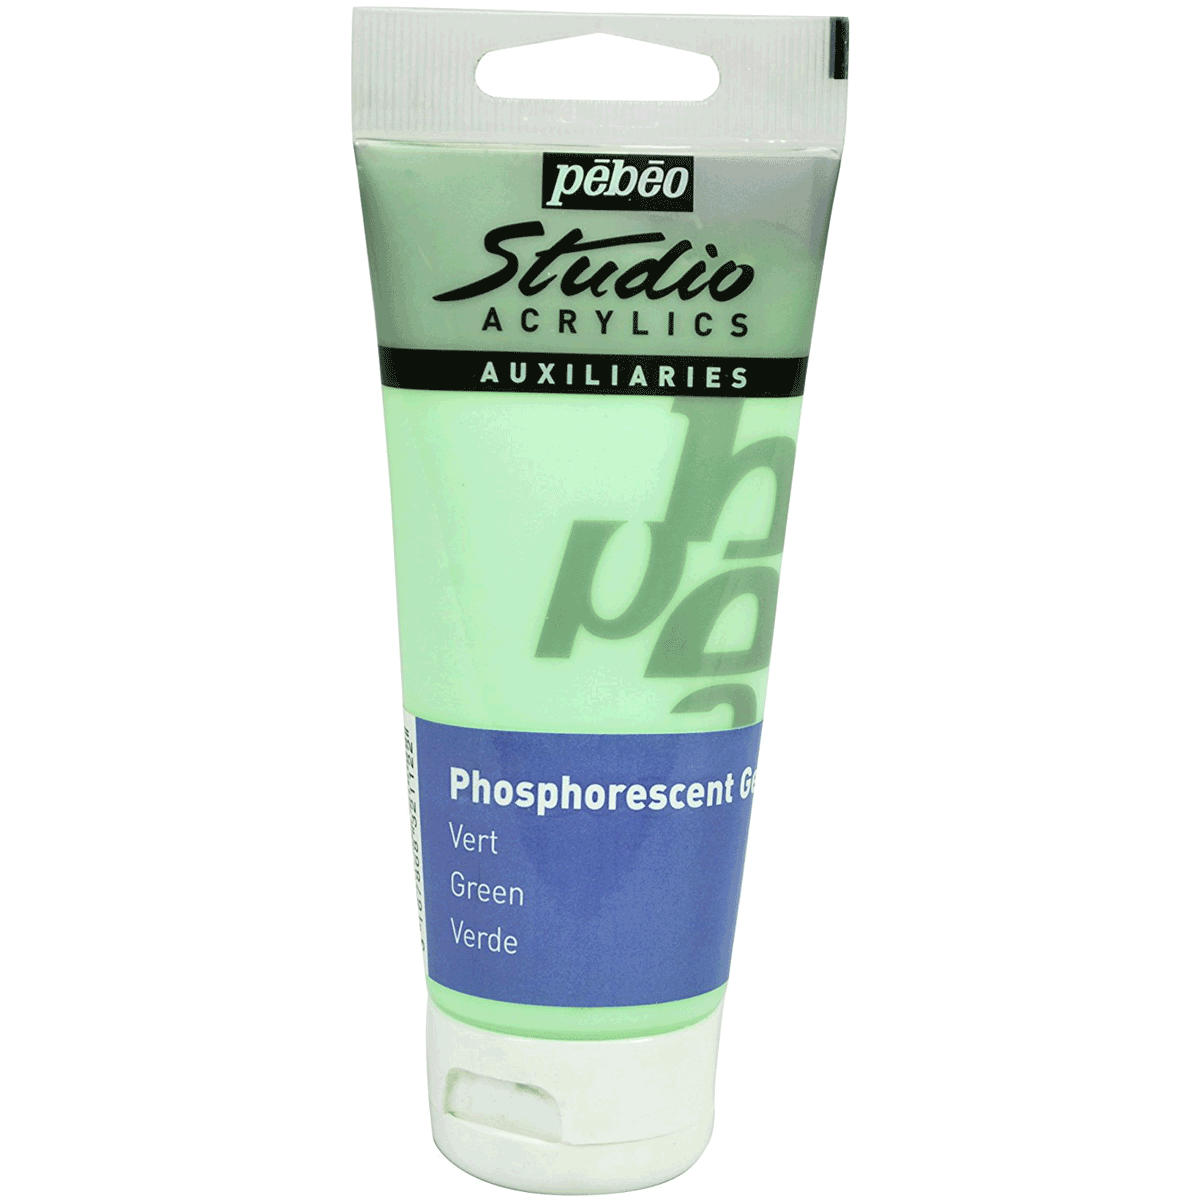 Pébéo Studio Acrylics Auxiliaries Phosphorescent Gel - Green 100 ml